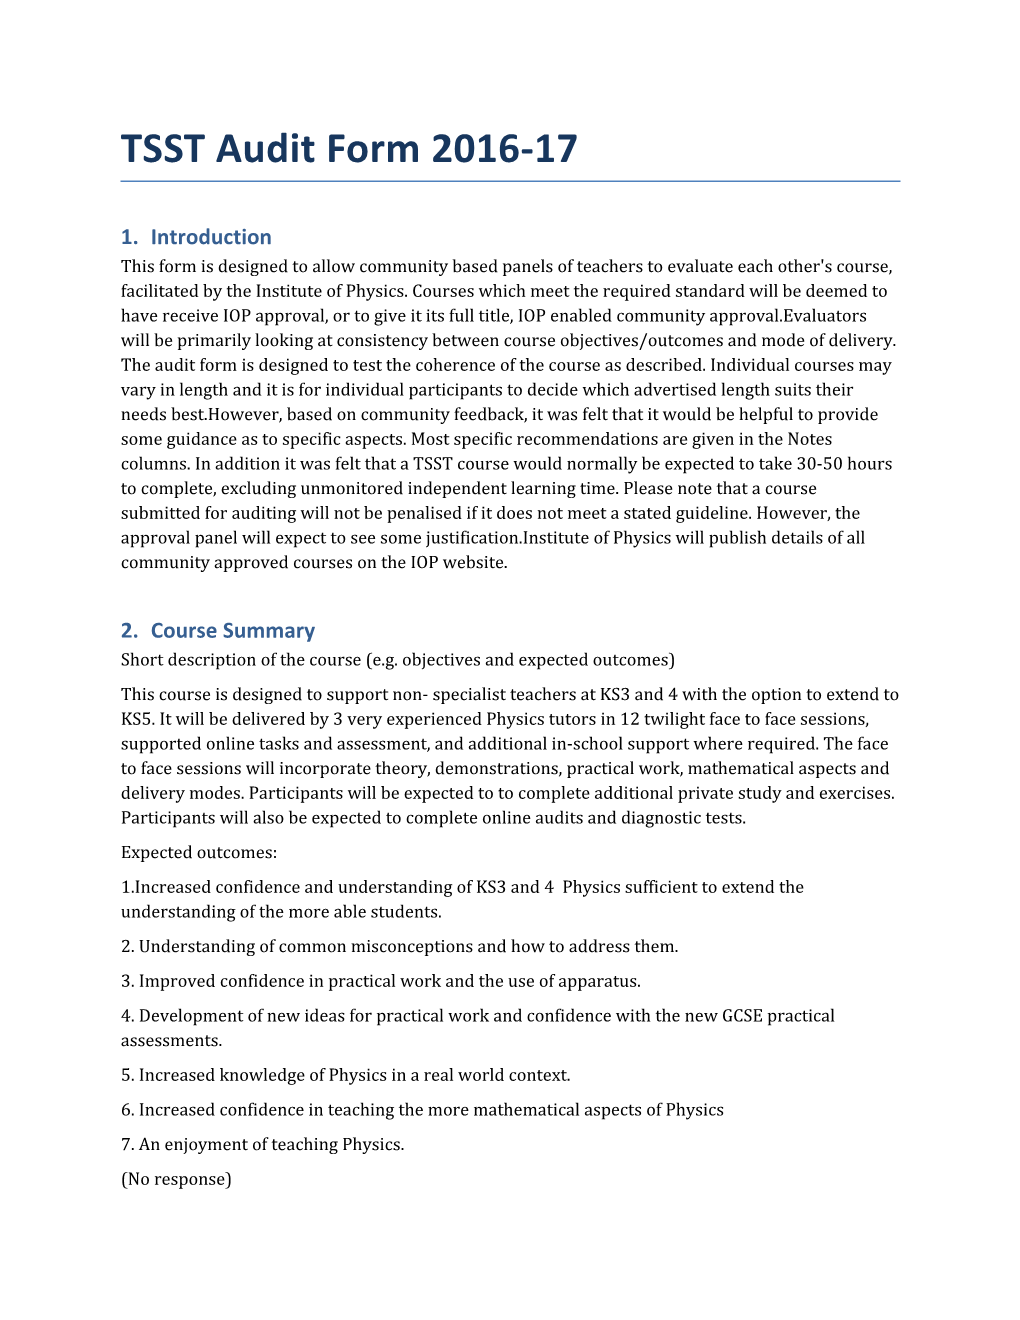 TSST Audit Form 2016-17